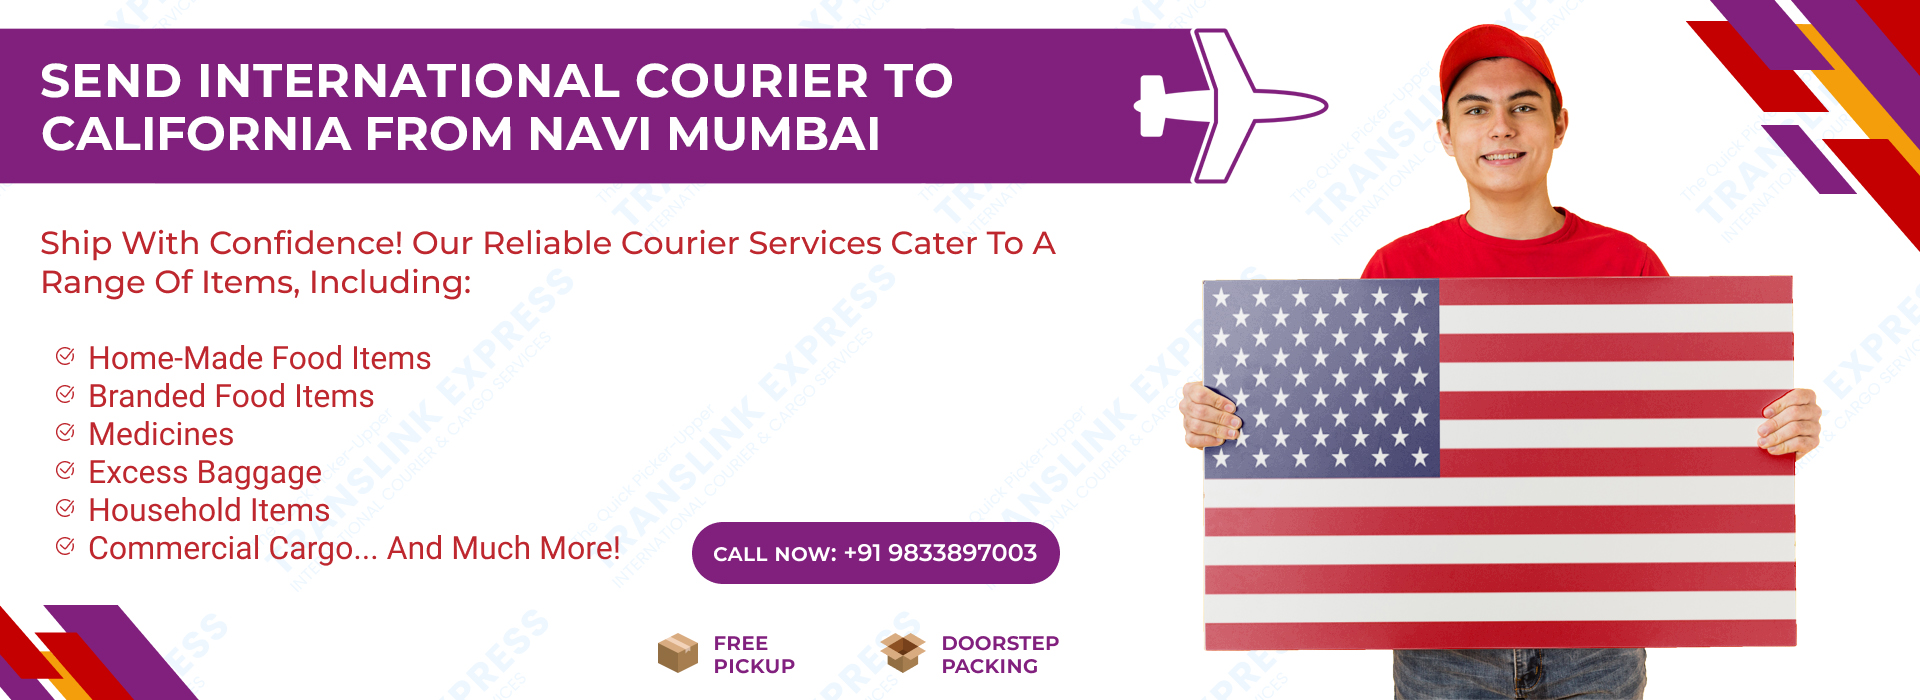 Courier to California From Navi Mumbai